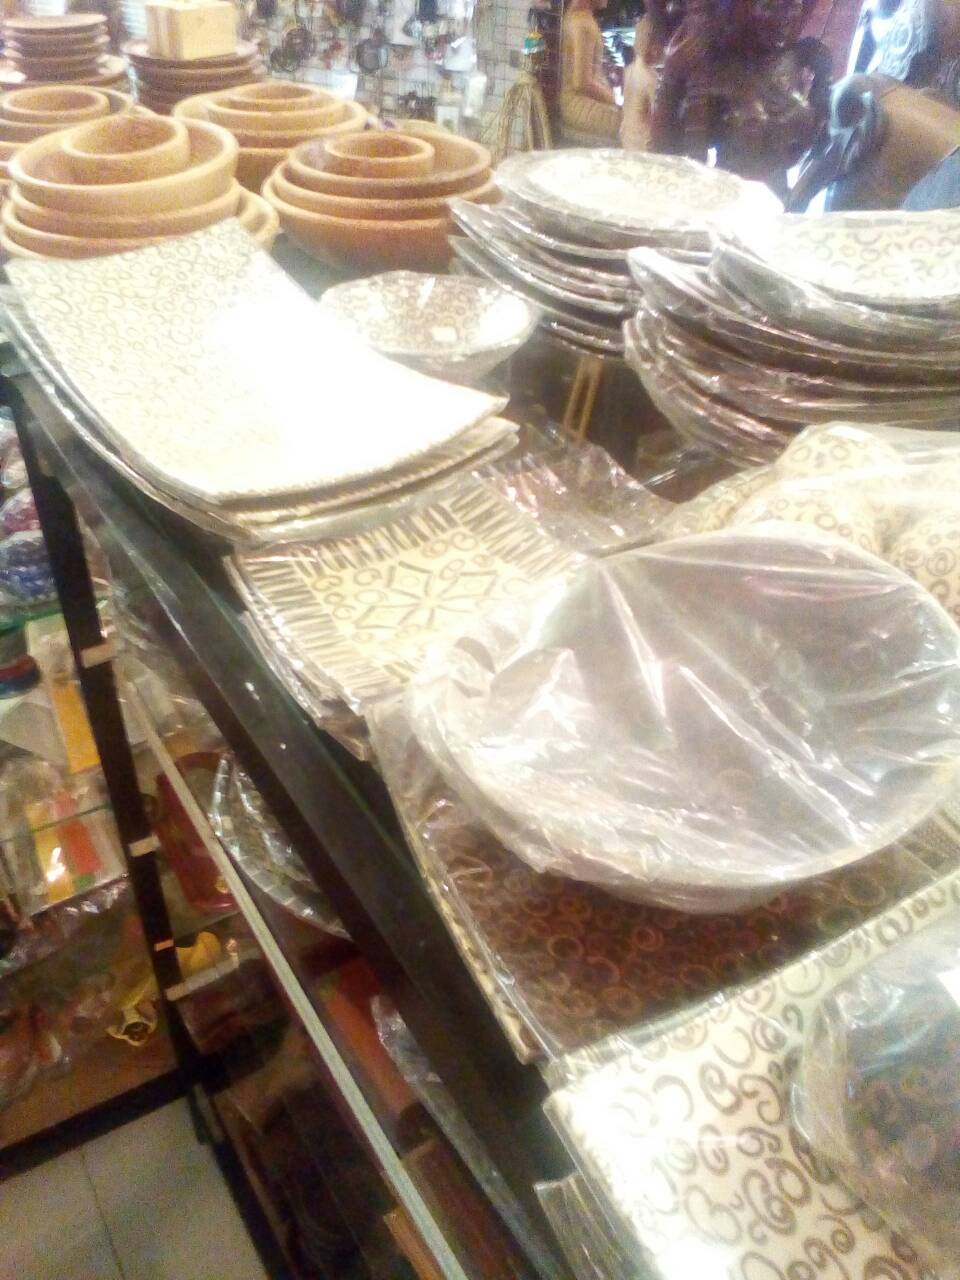 Dishes of cinnamon, Sri Lanka